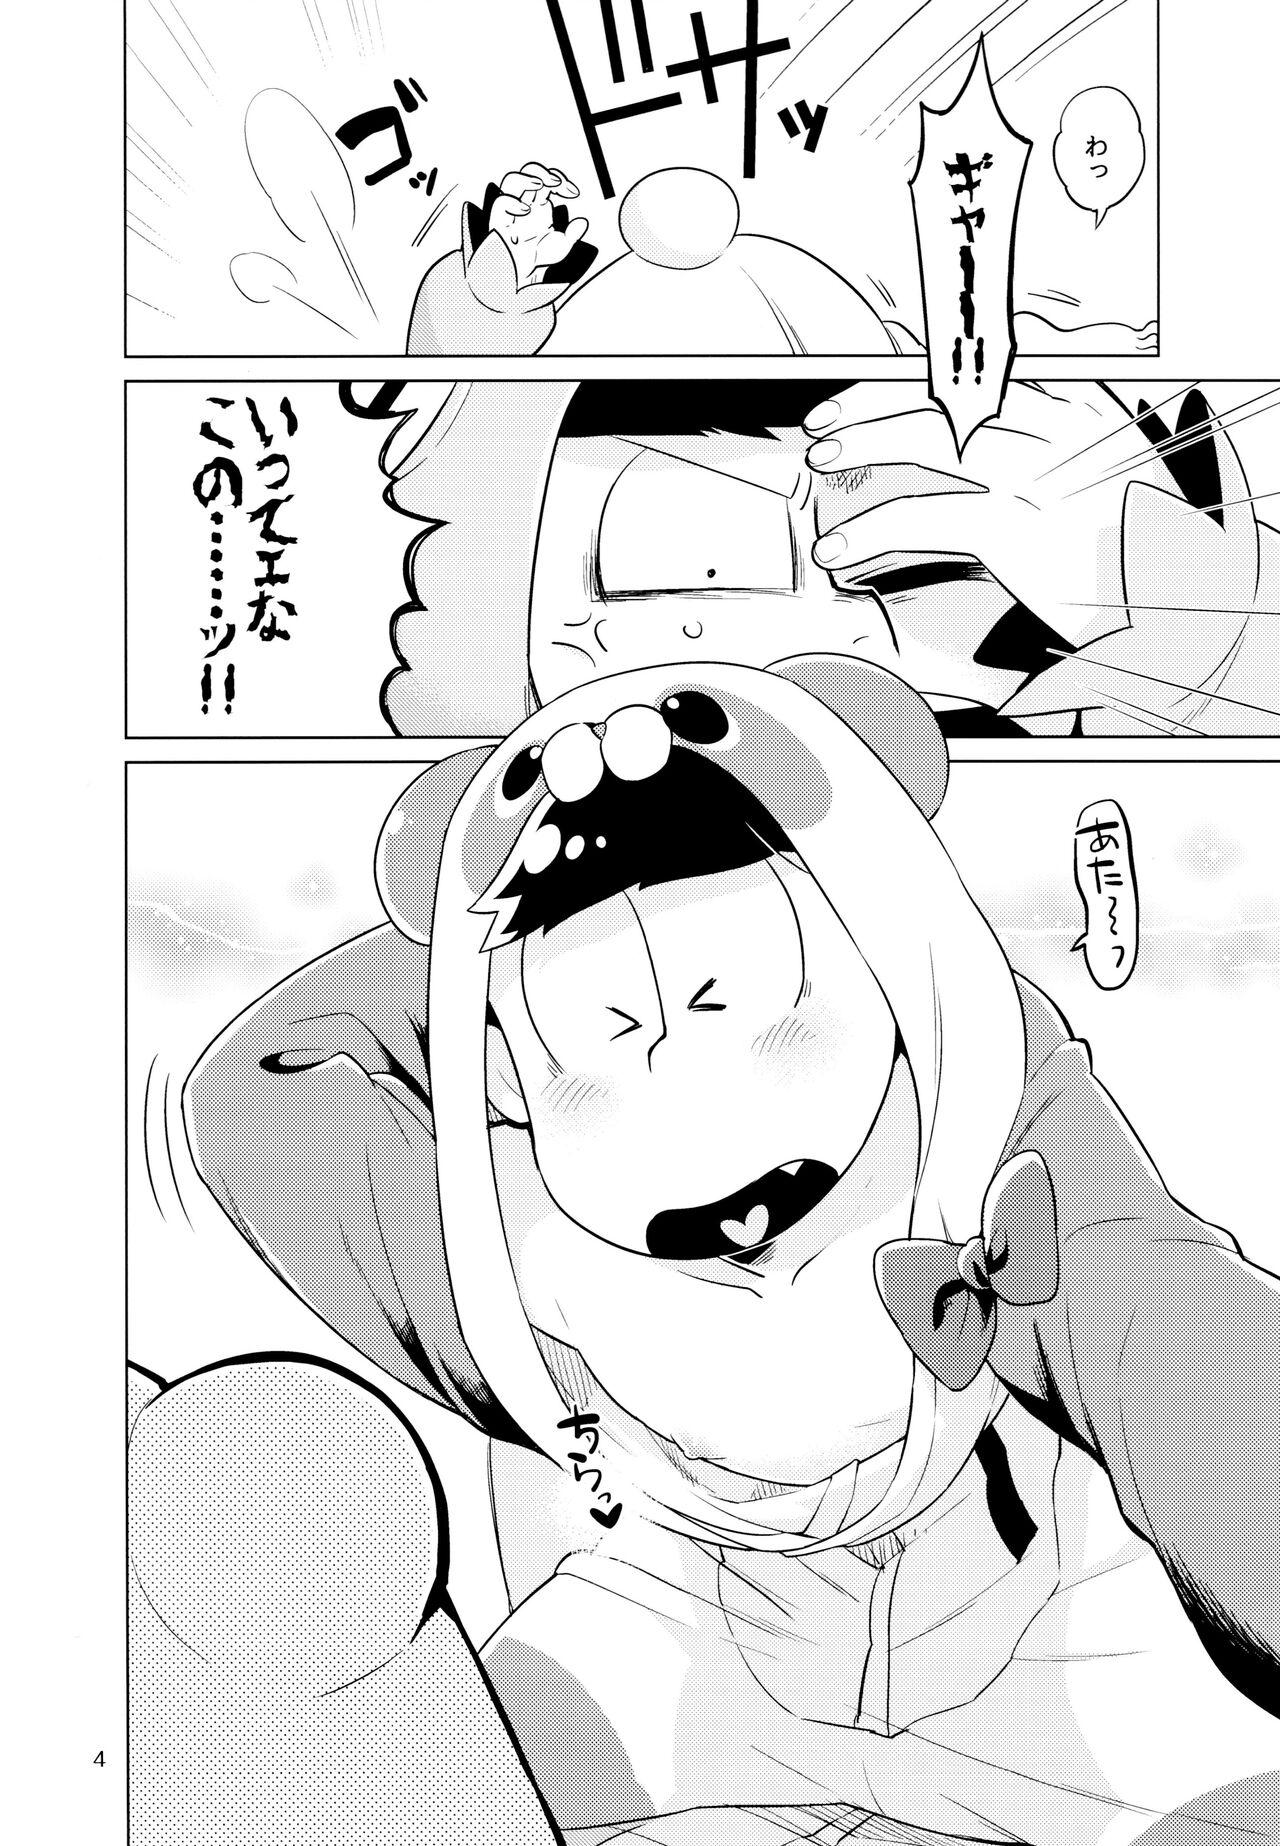 Latex Pajamama! - Osomatsu san Pica - Page 4